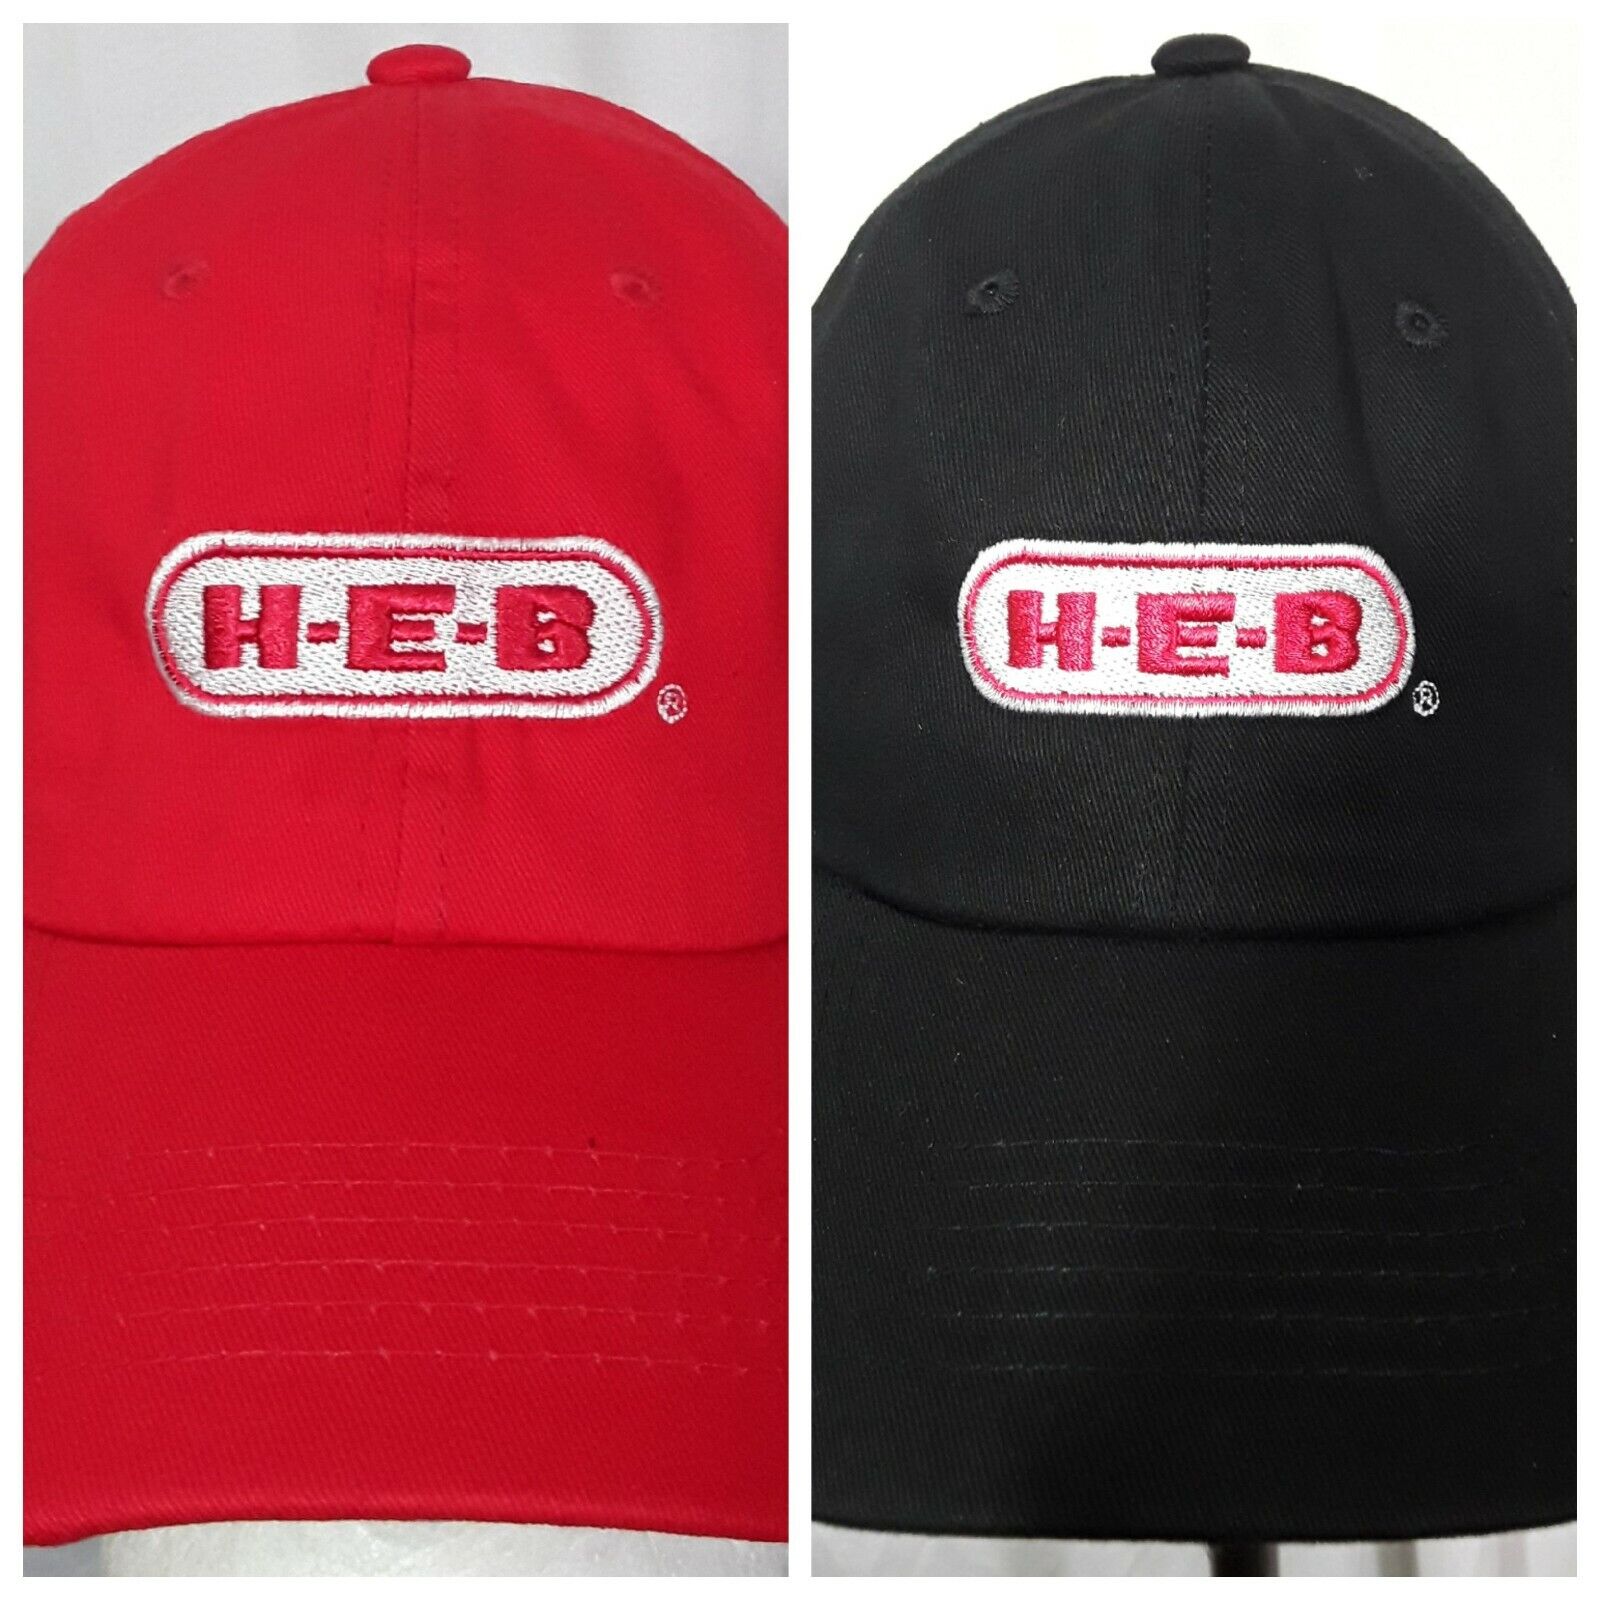 H-E-B LOGO STITCHED EMBROIDERED COTTON BASEBALL HAT CAP ADJUSTABLE | eBay